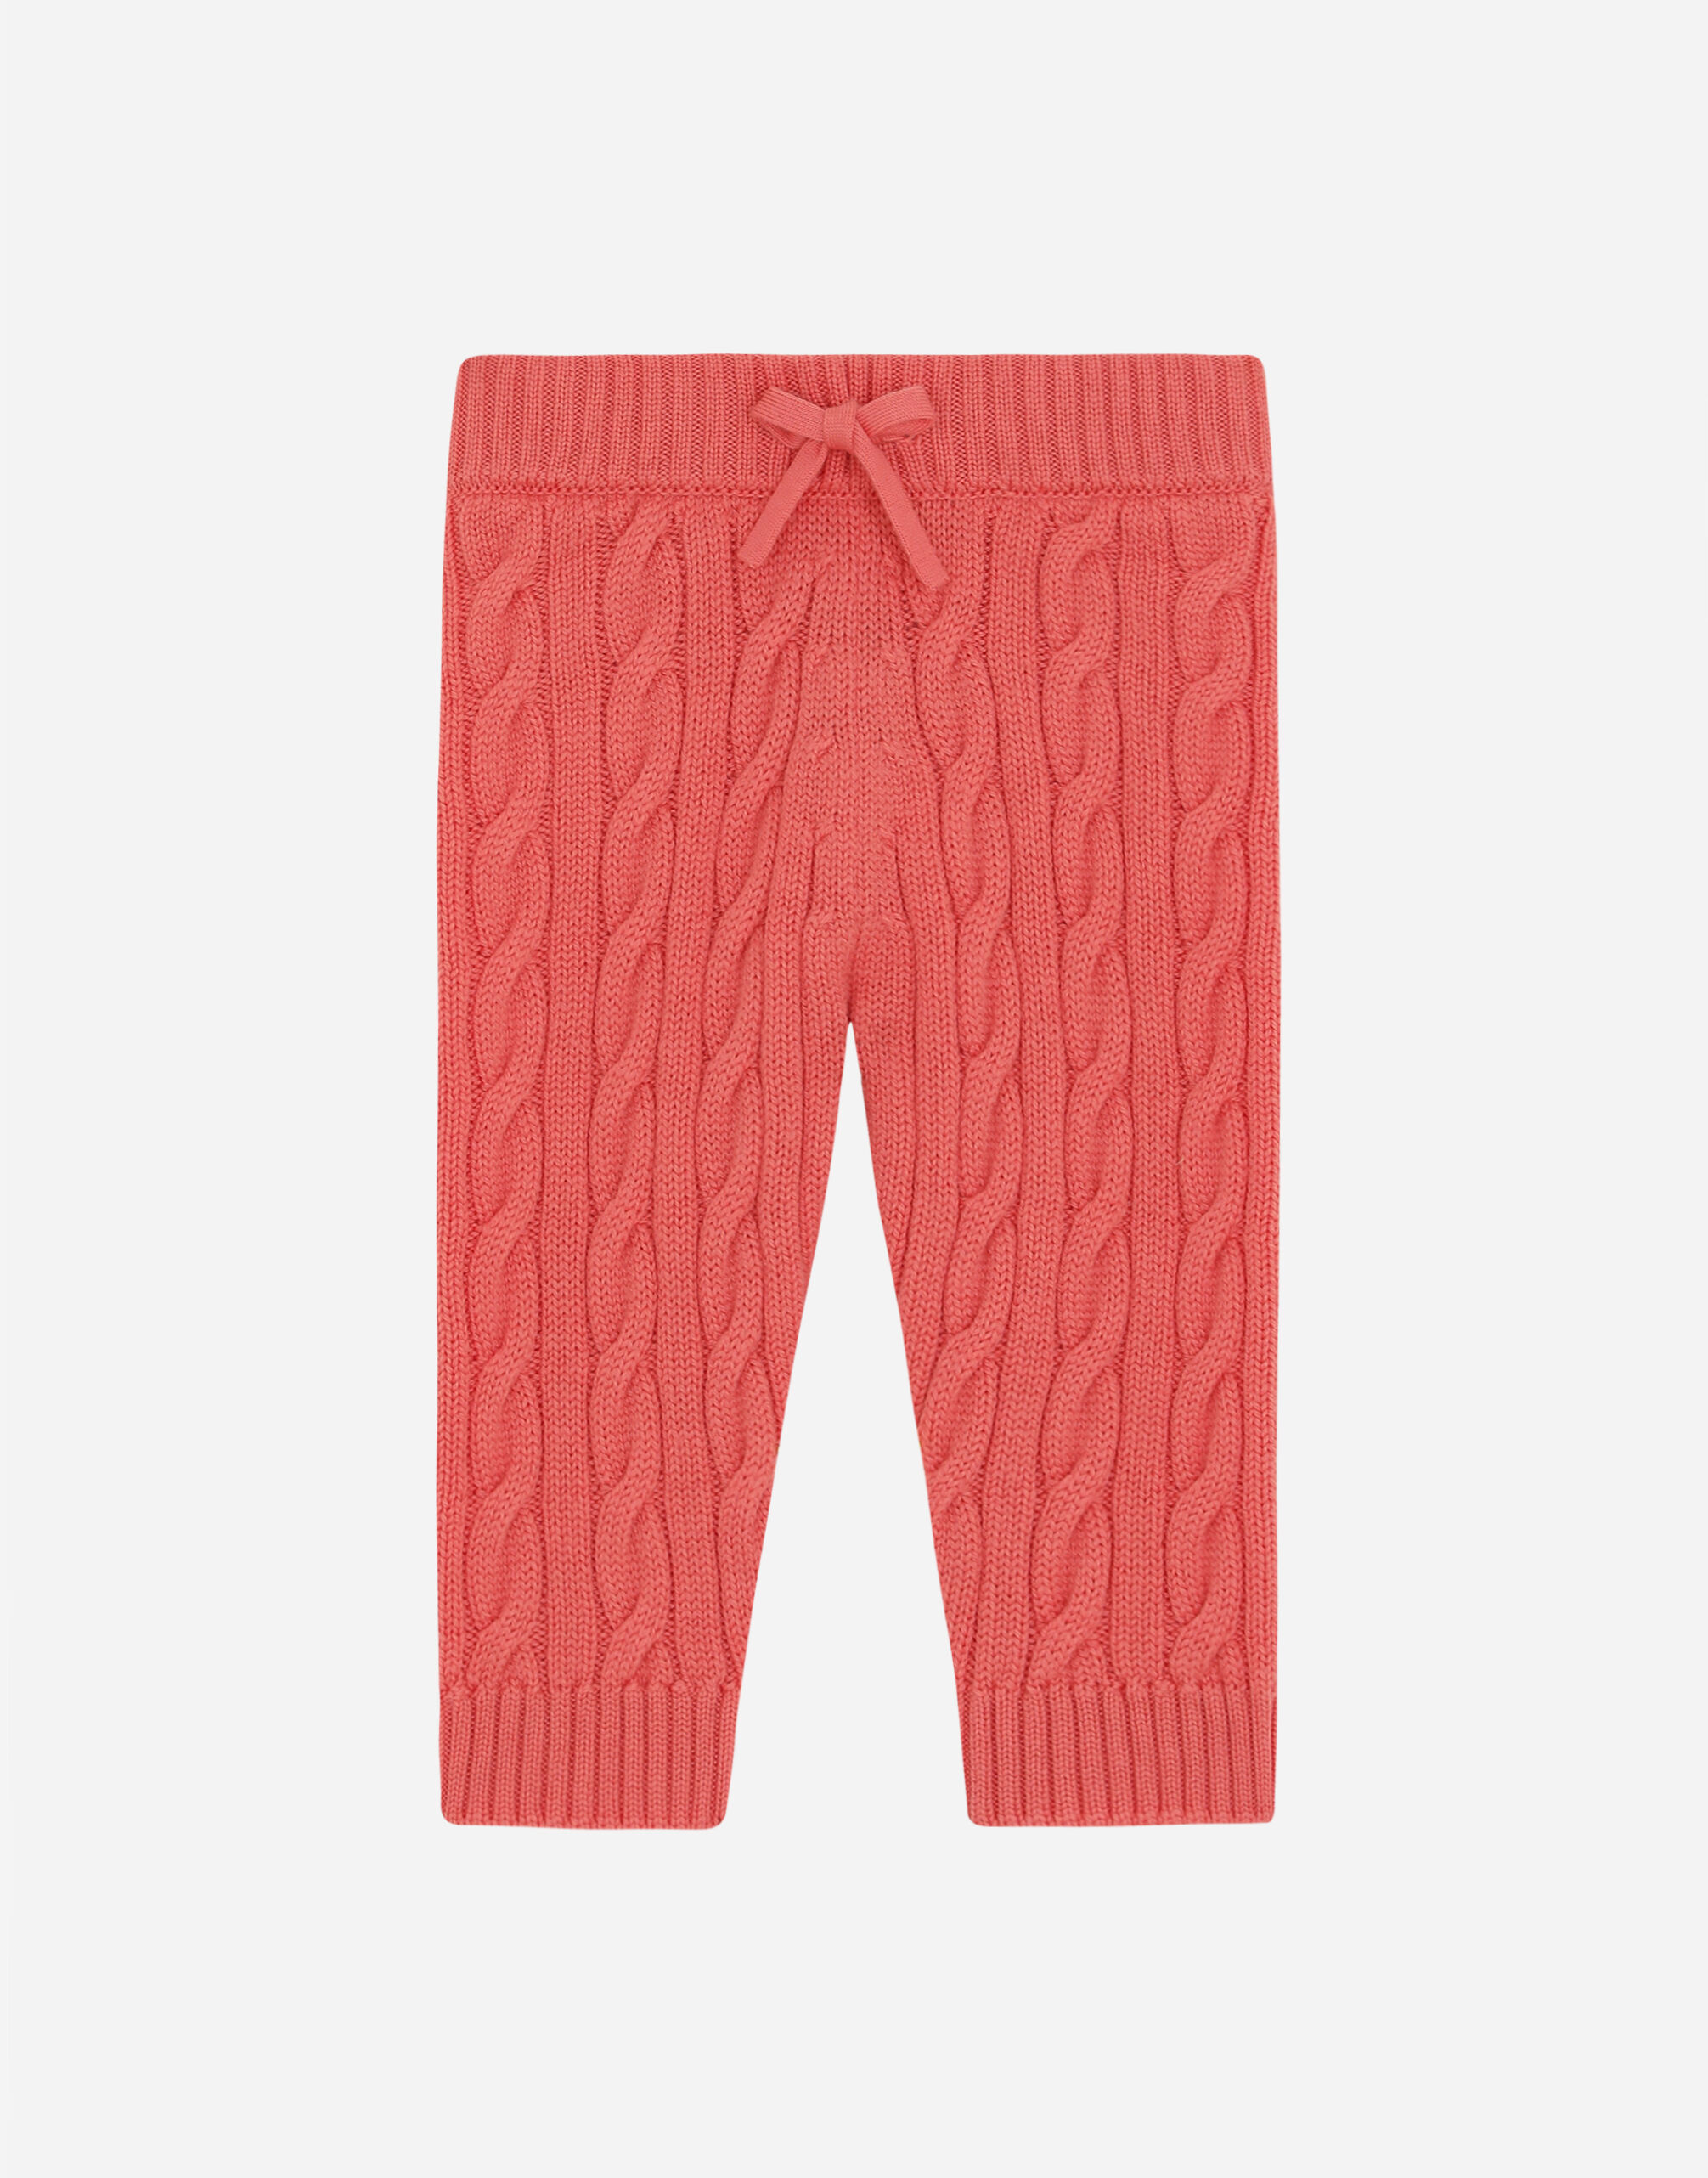 Dolce & Gabbana Cable-knit pants with DG logo patch Azure L1JT7TG7OLK